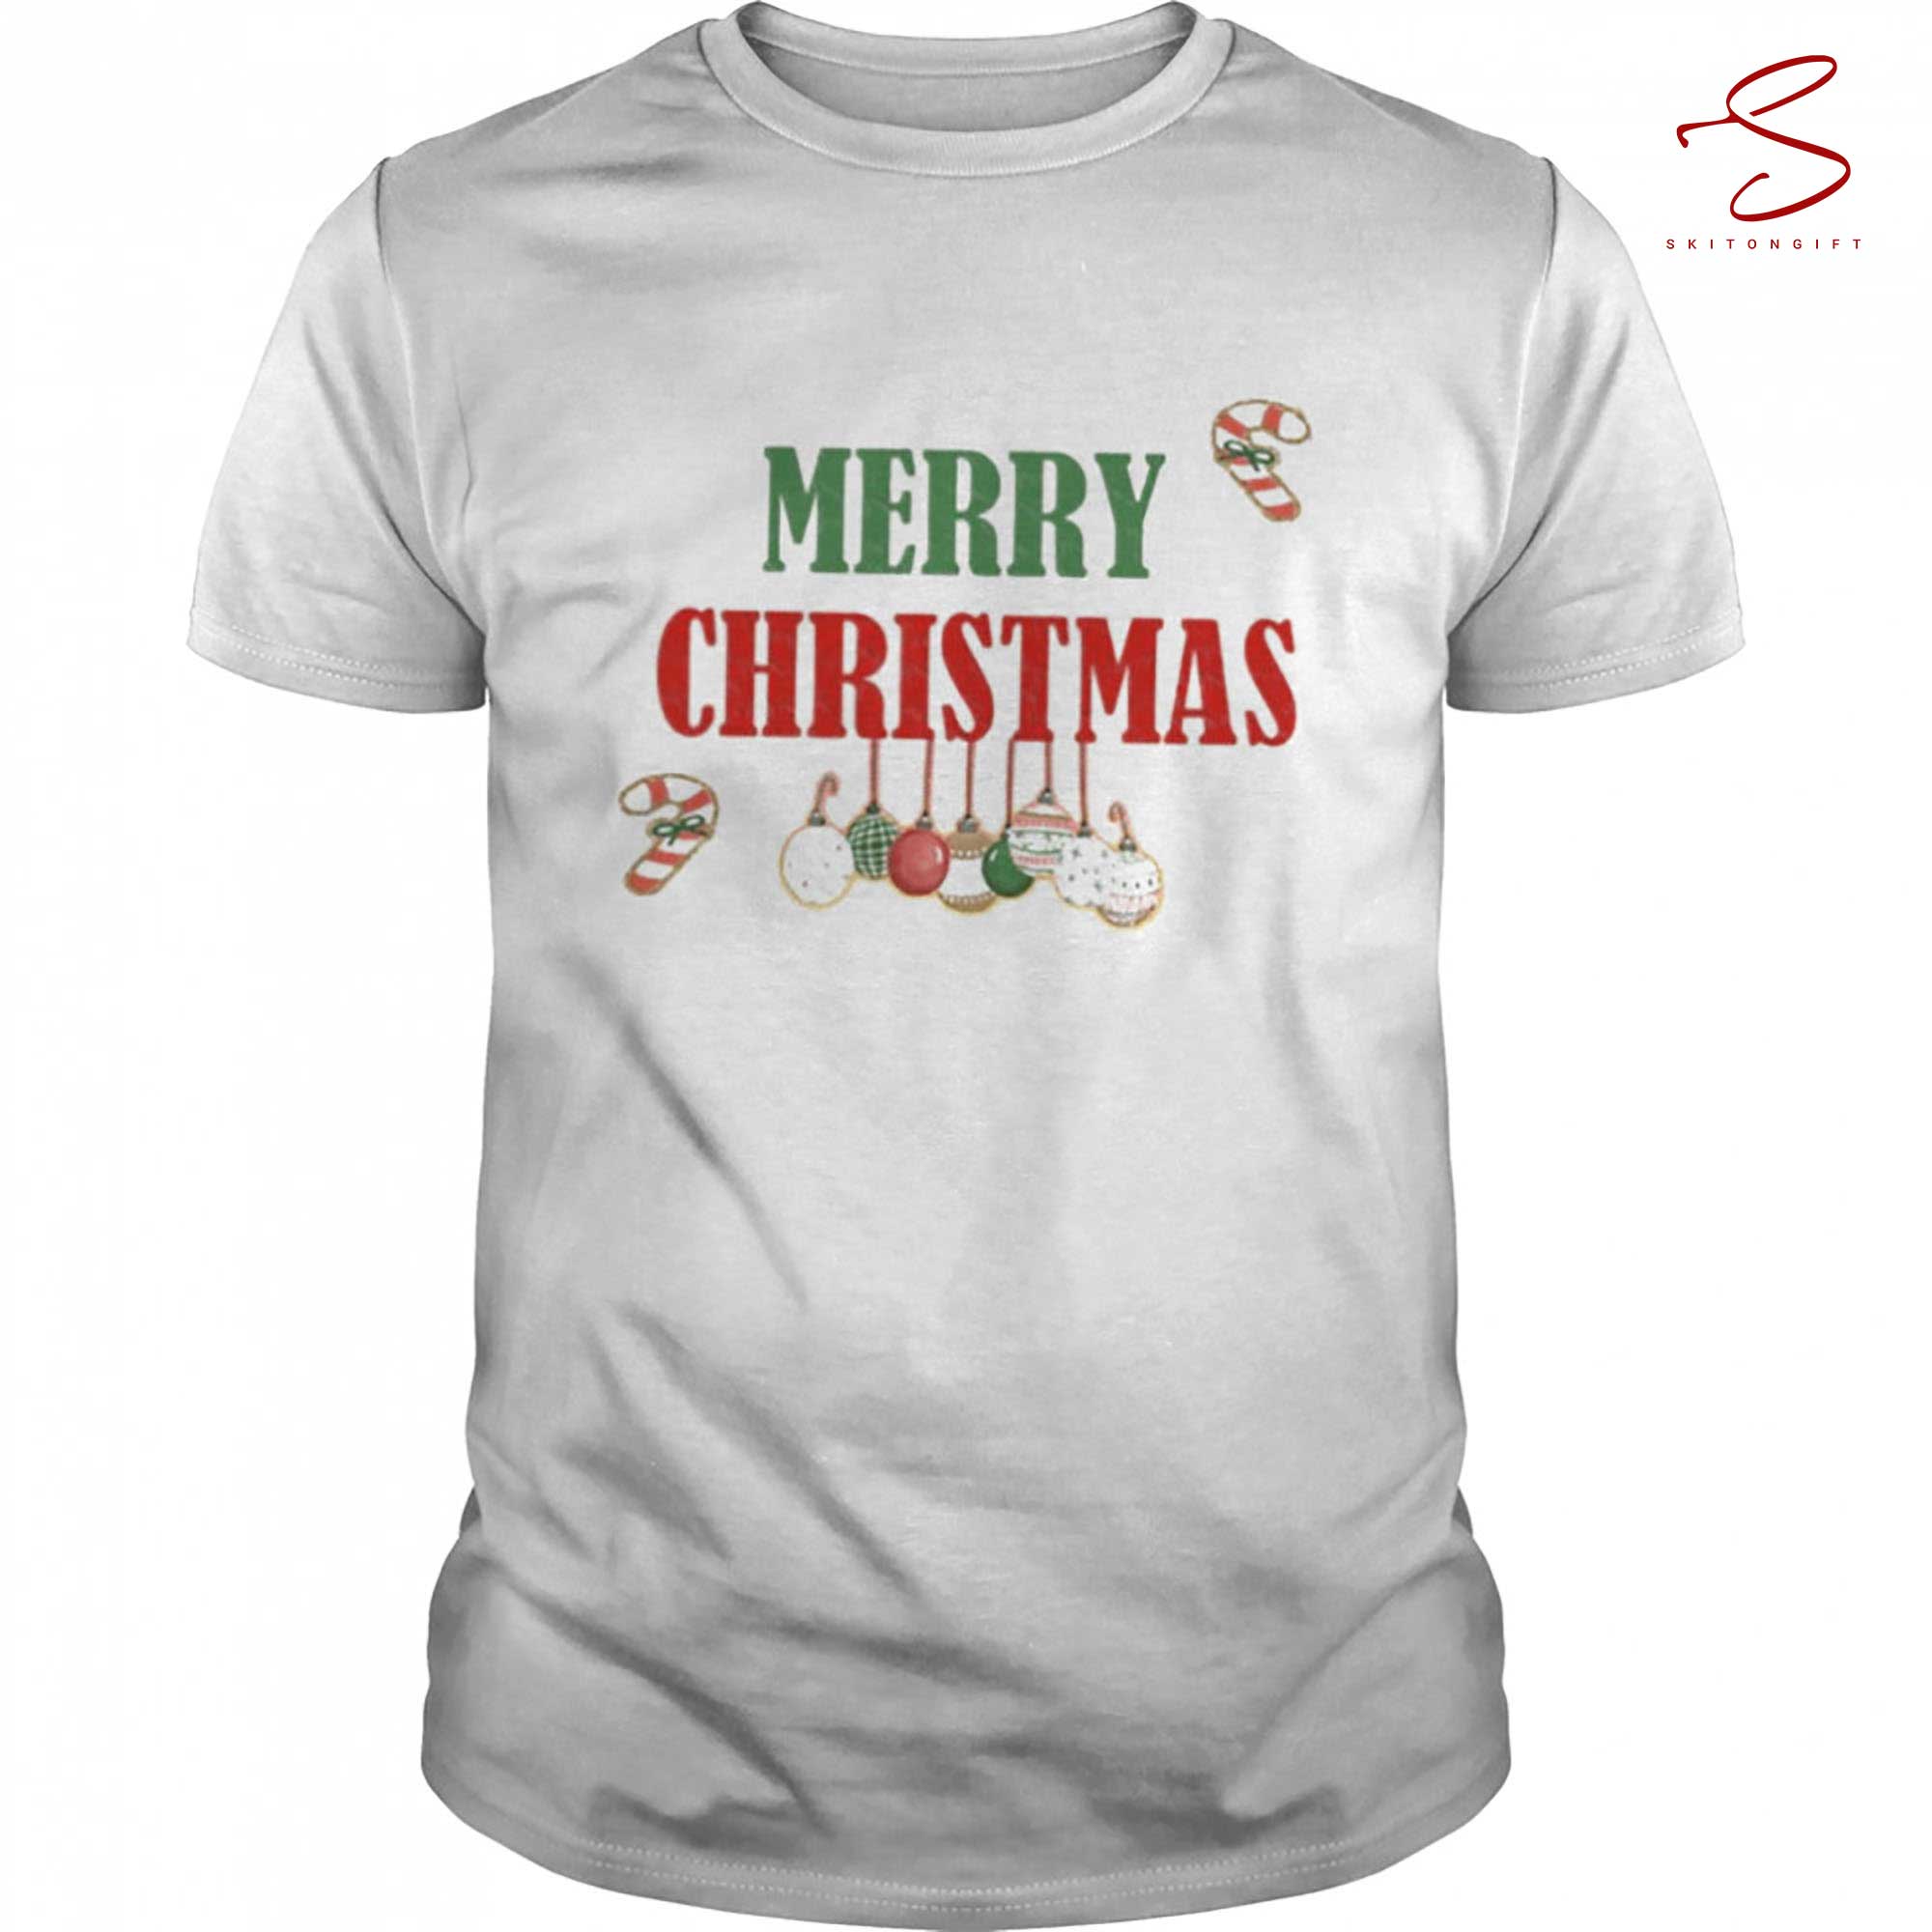 Skitongift Retro Vintage Merry Christmas Shirt